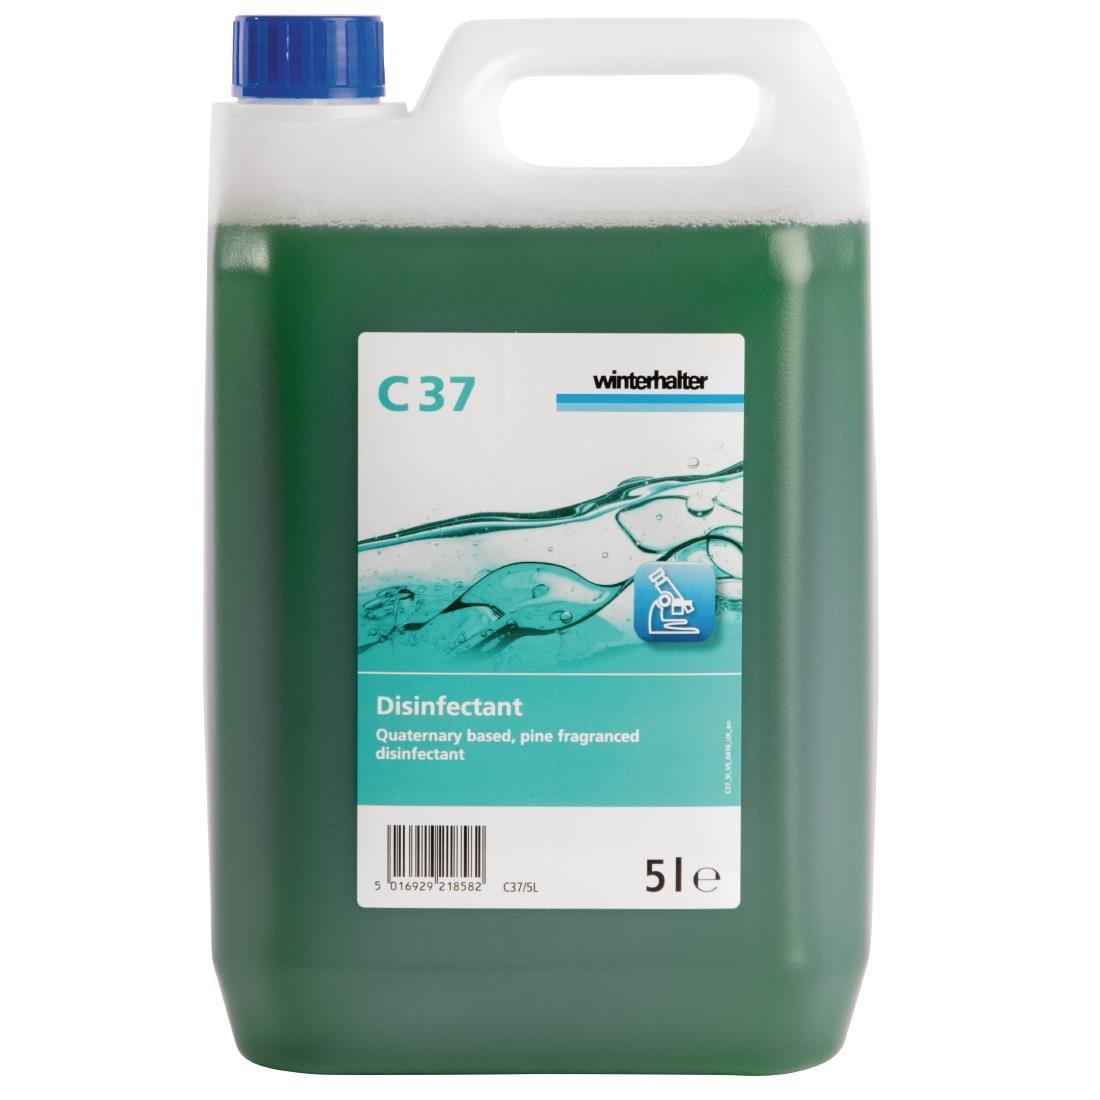 Winterhalter C37 Pine Disinfectant Concentrate 5Ltr - 2 x 5litres Pack - DR270 - 1